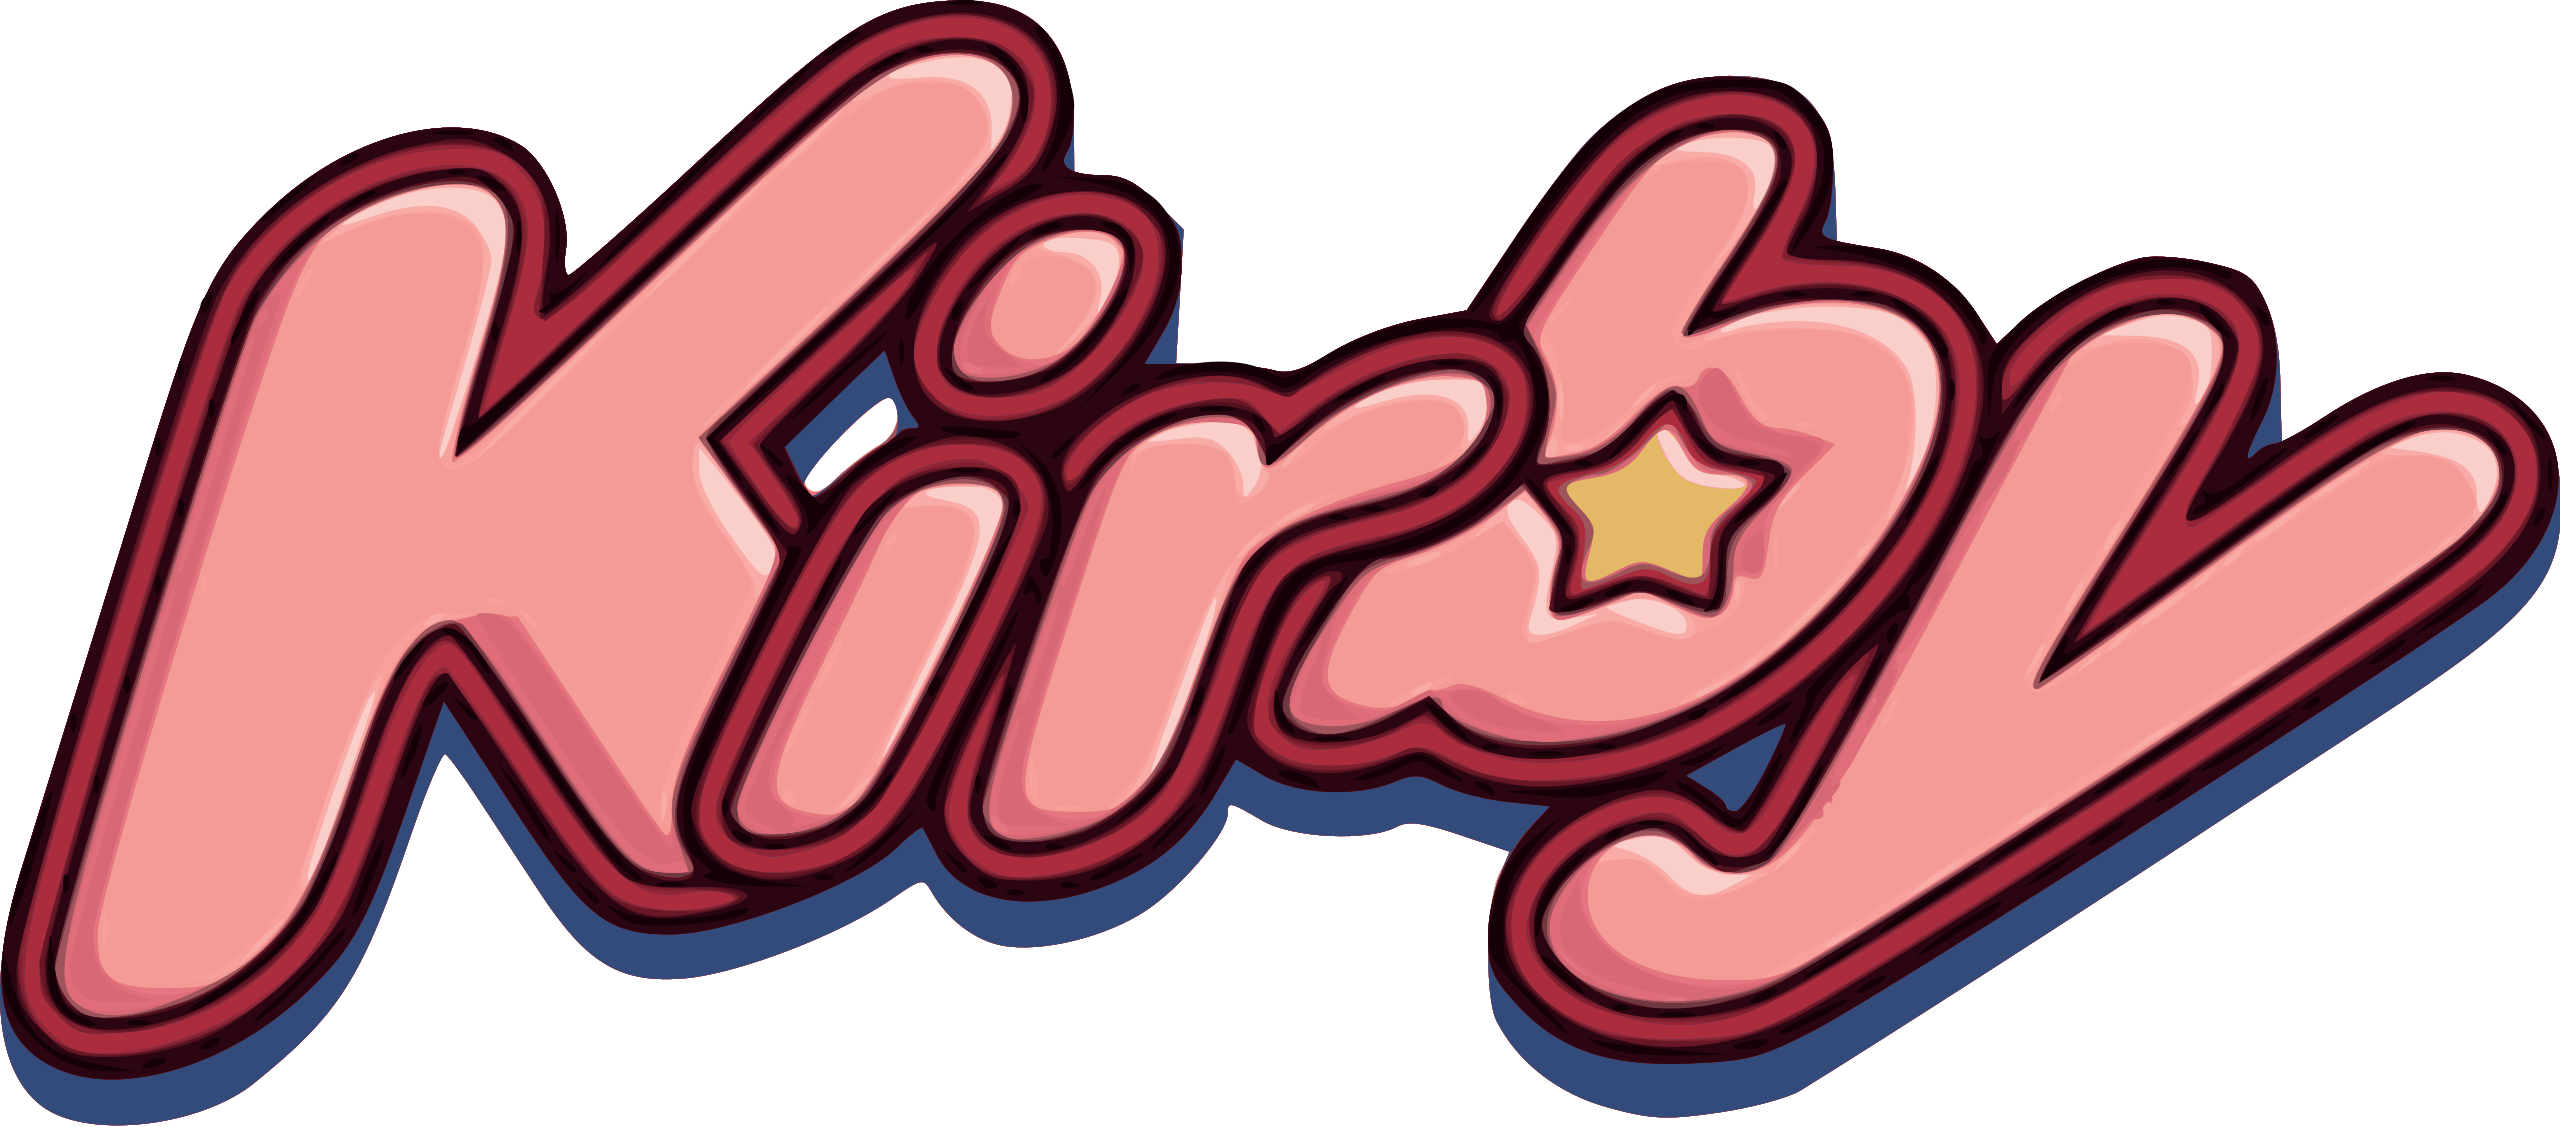 kirby logo